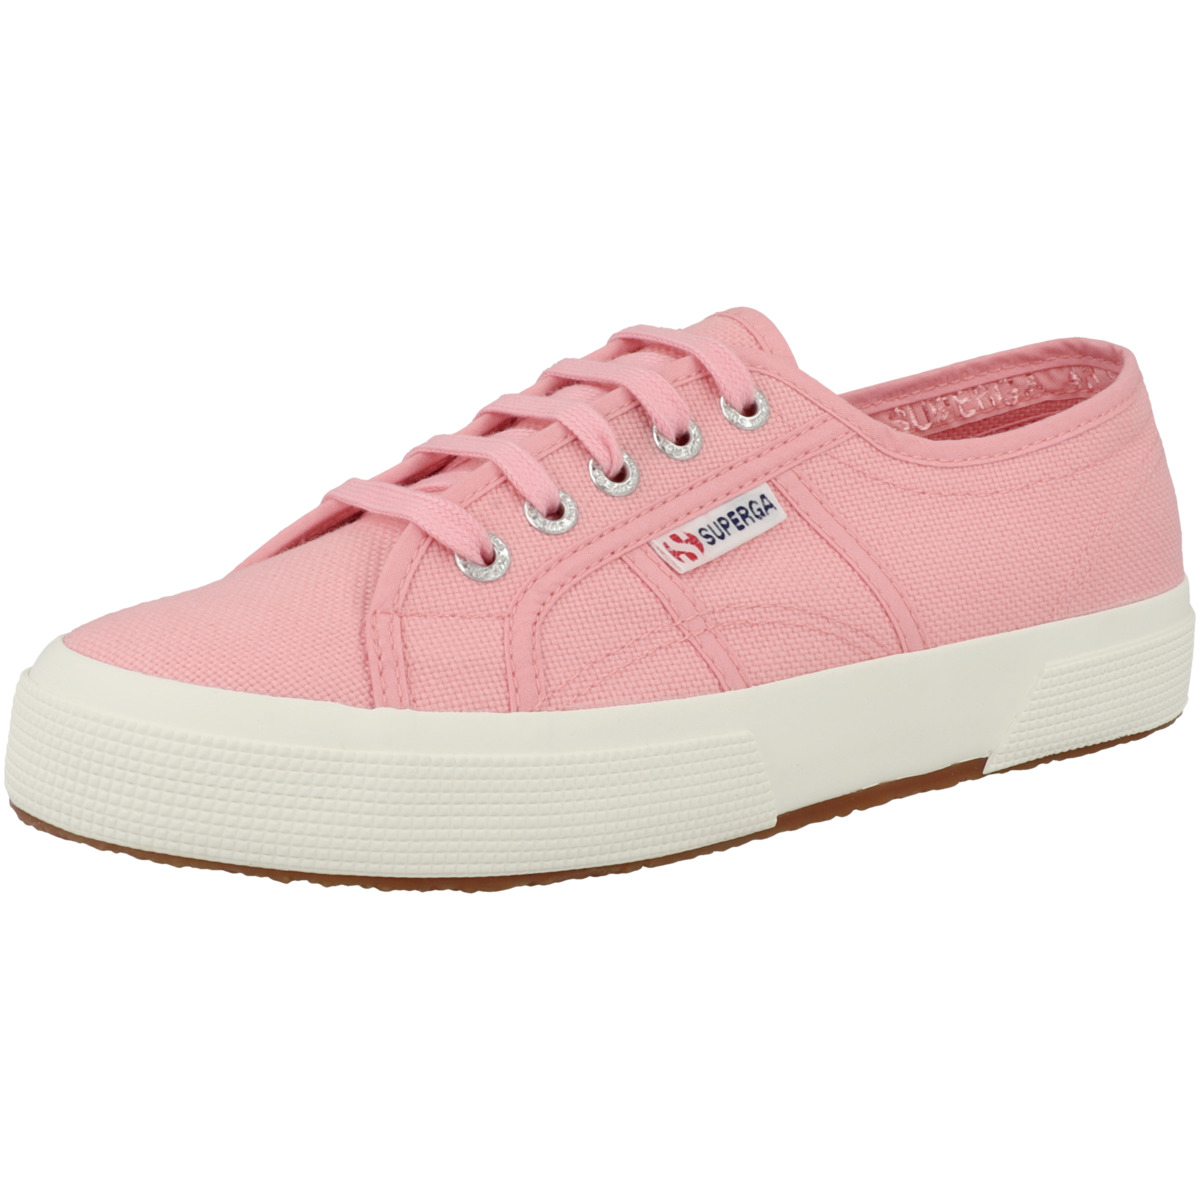 Superga 2750 Cotu Classic Sneaker pink